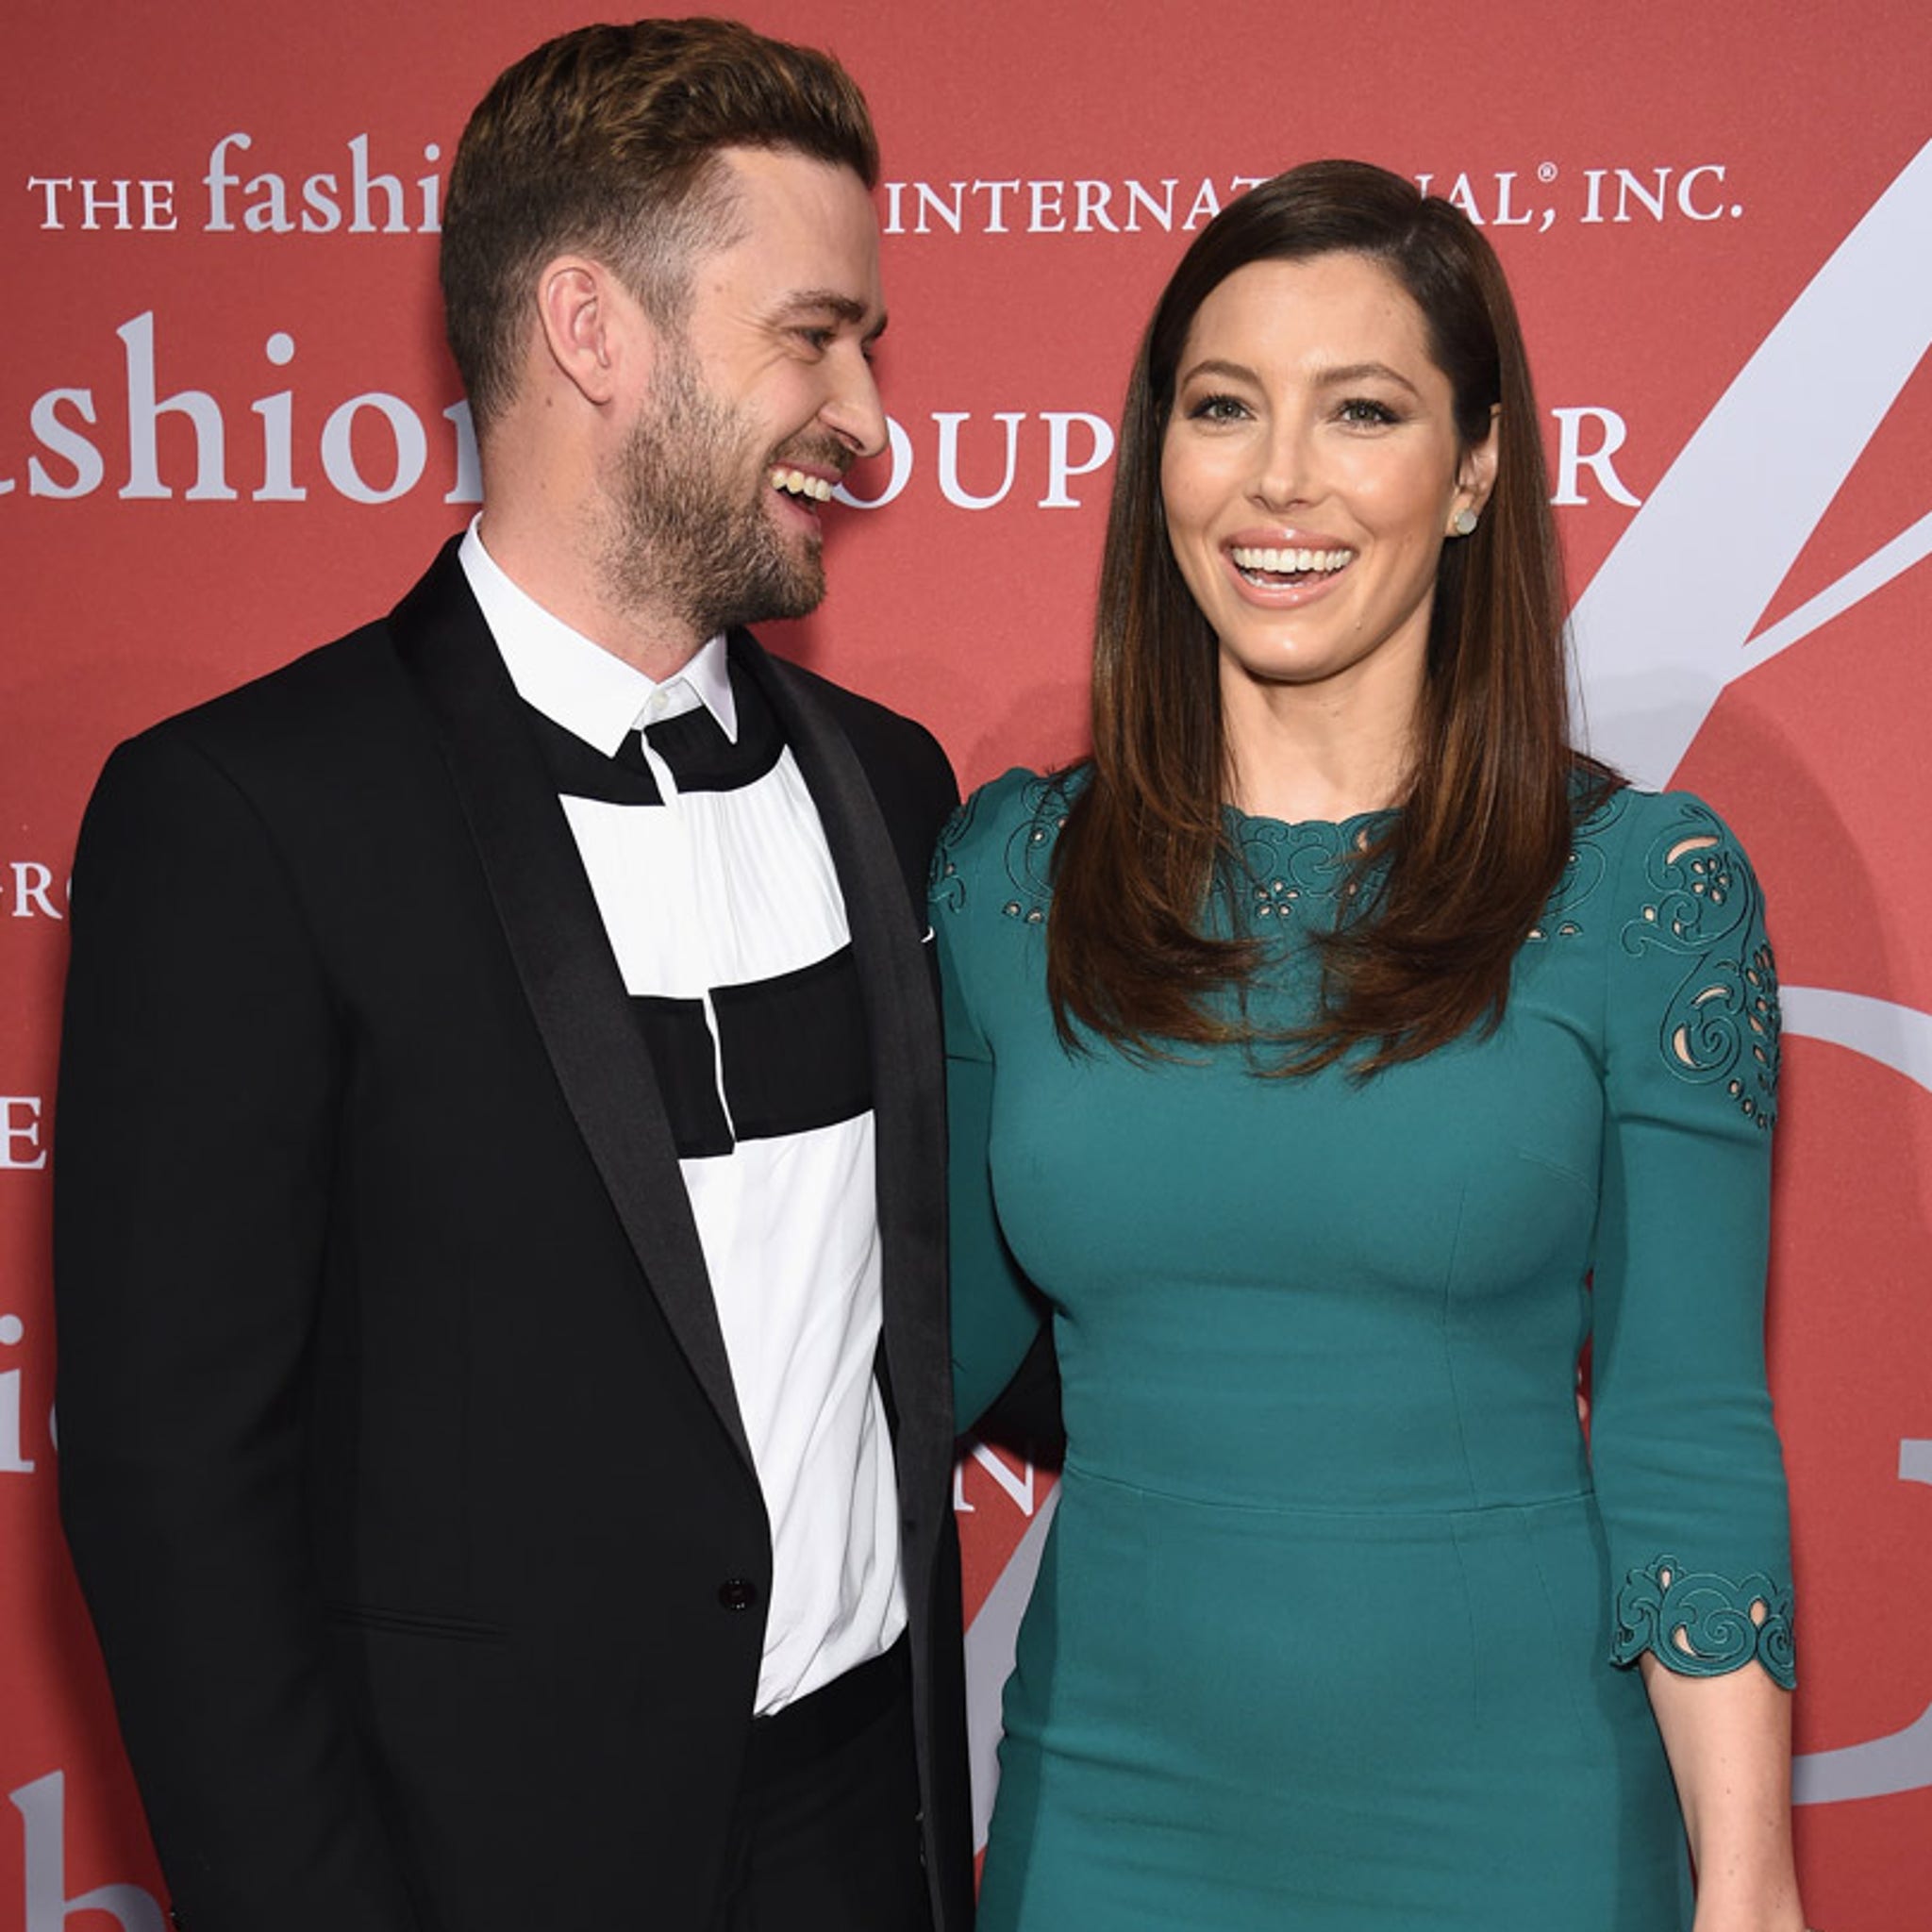 Justin Timberlake News: Justin Timberlake, Naomi Campbell and a